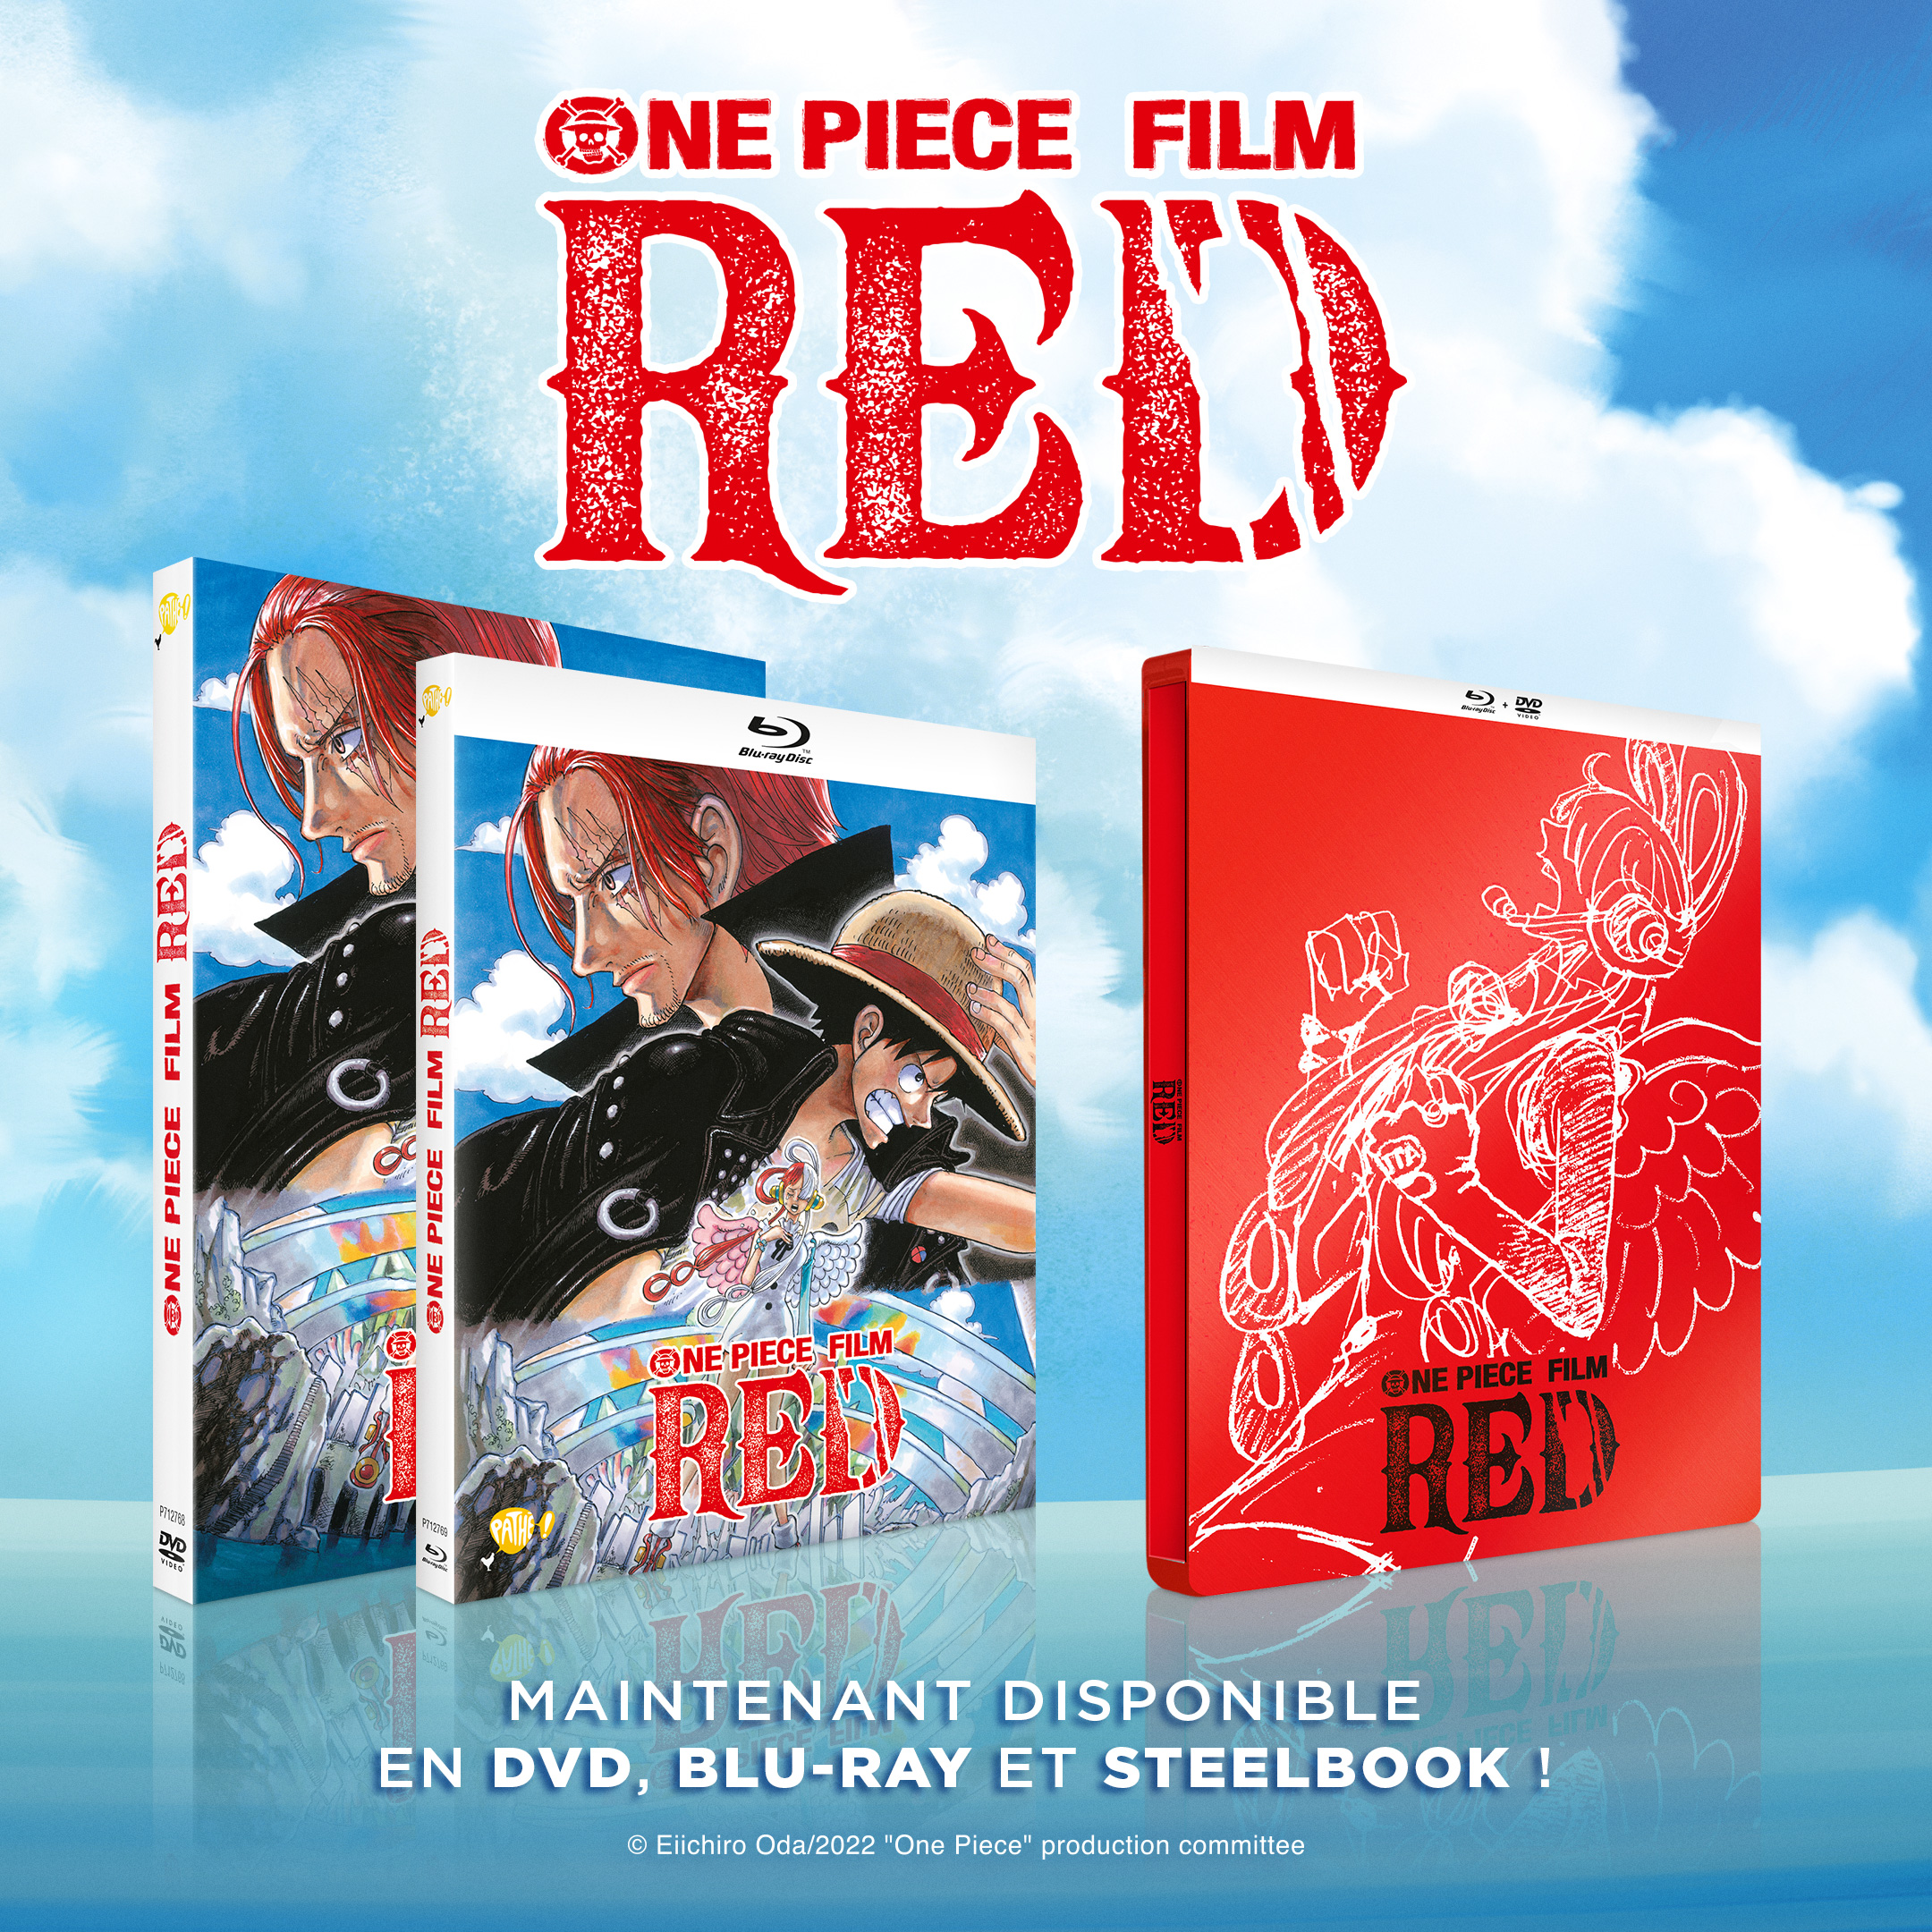 ONE PIECE FILM: RED